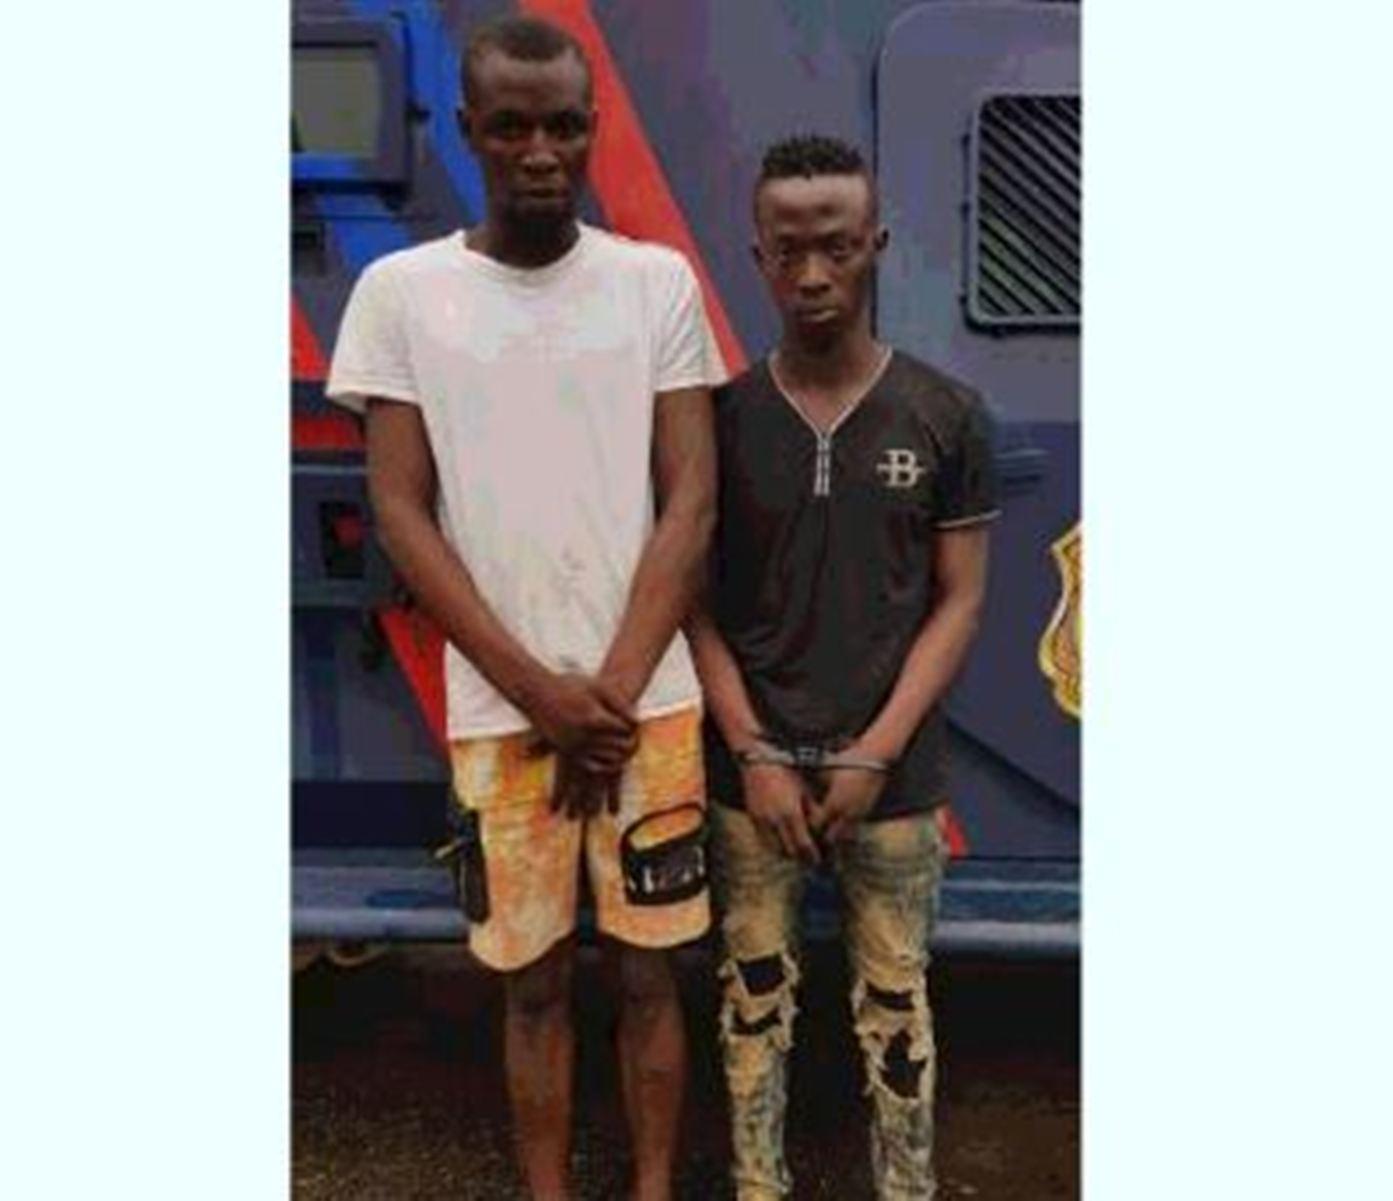 We strangulate victims, sell SIM cards N2000 ― Traffic robbers reveal